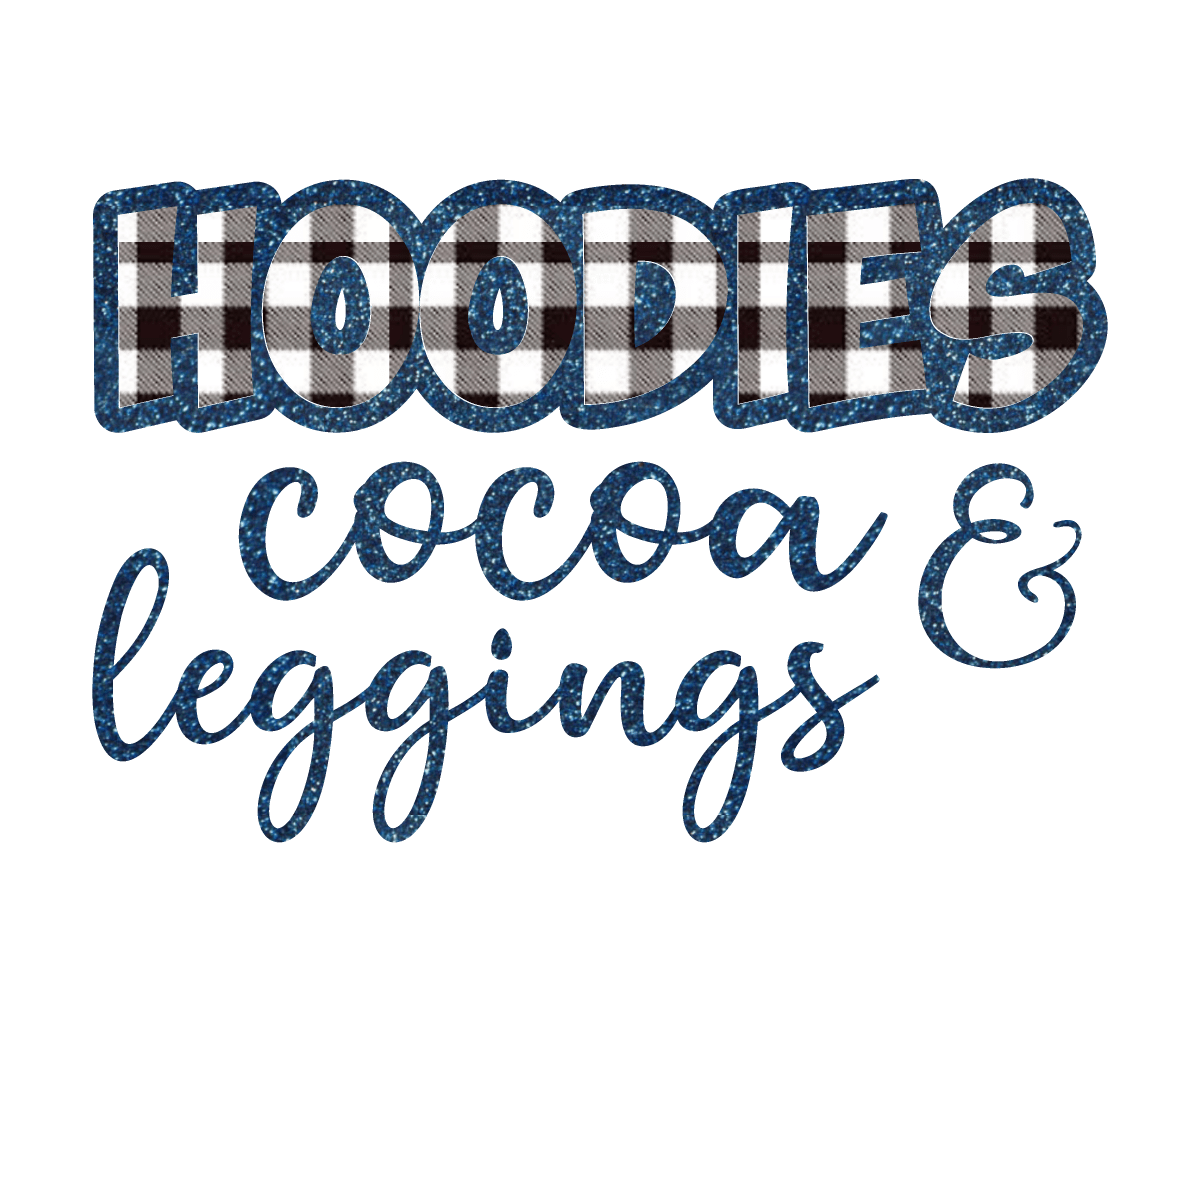 HOODIES COCOA AND LEGGINGS - DIGITAL